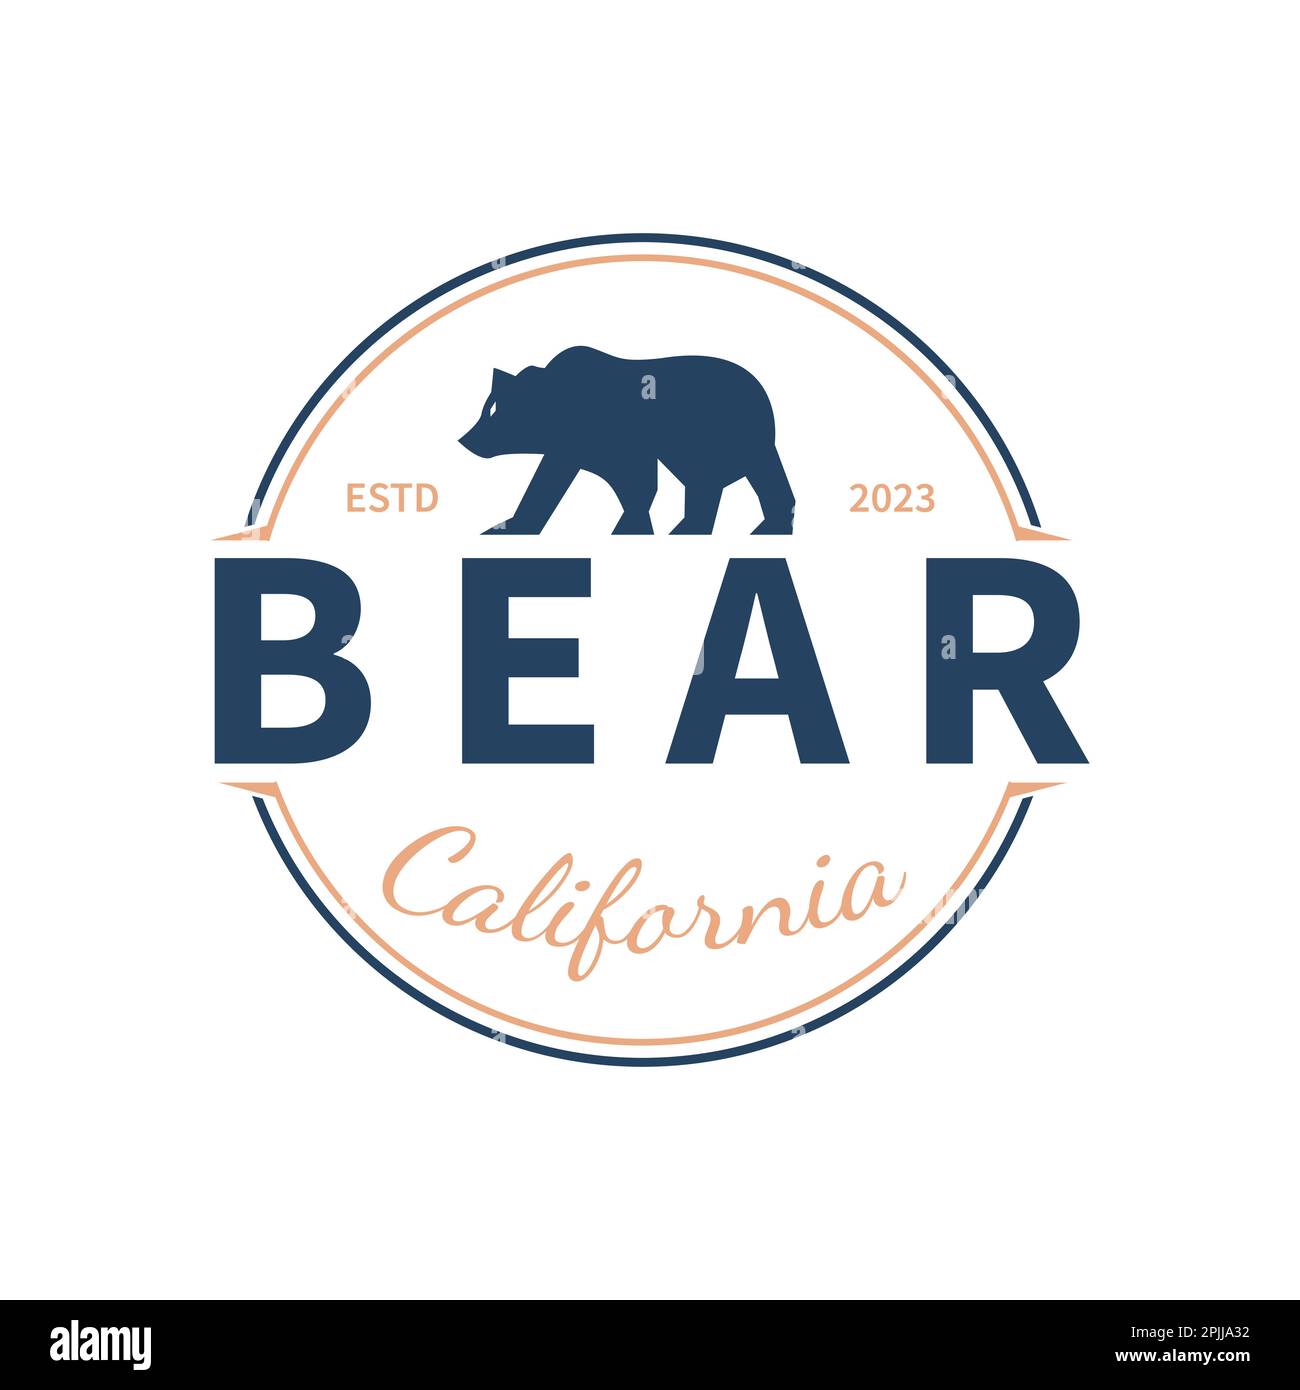 Emblem logo with bear silhouette. Wild west vintage california badge. Vector illustration. Stock Vector